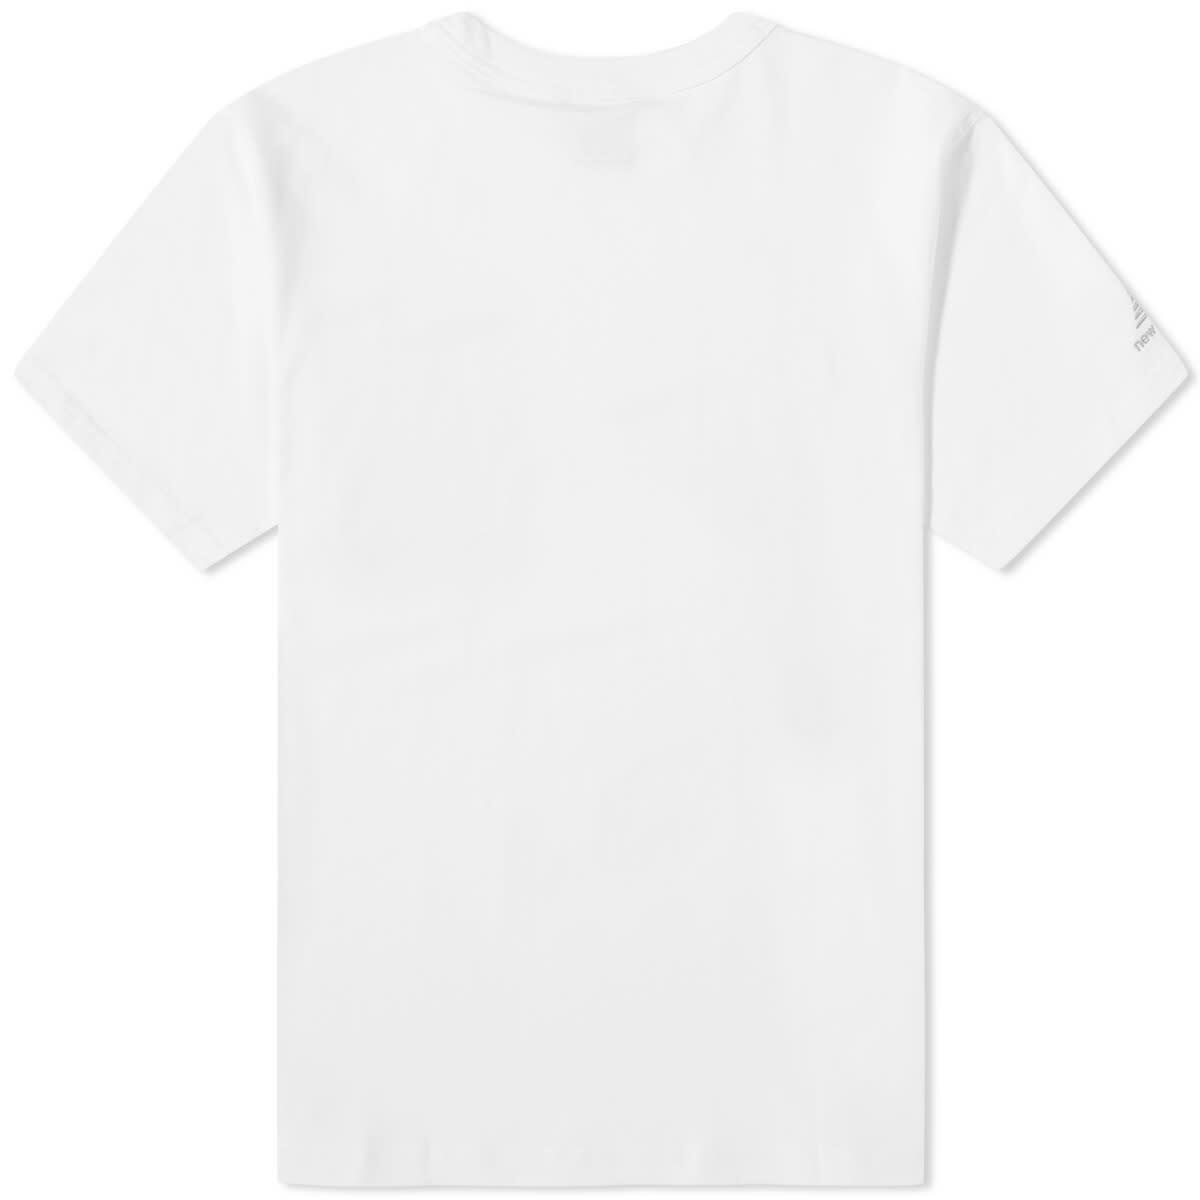 New Balance Balance Paul Rich x T-Shirt in New White